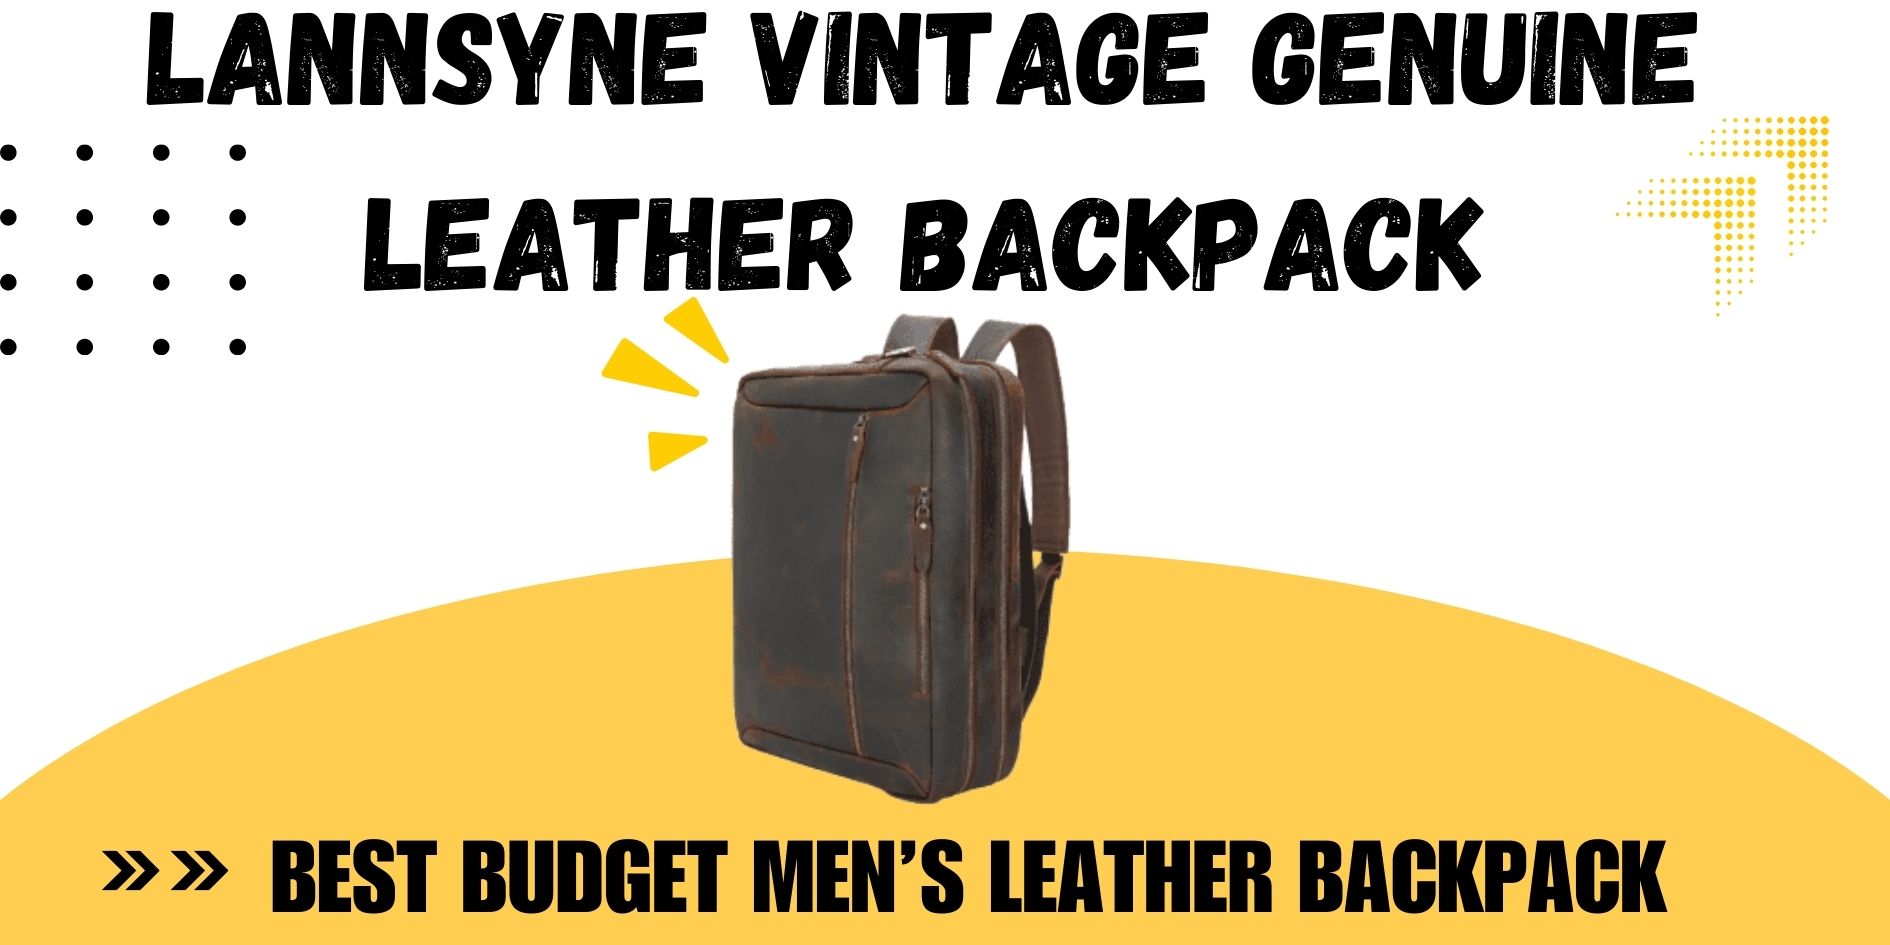 Best Budget Men’s Leather Backpack